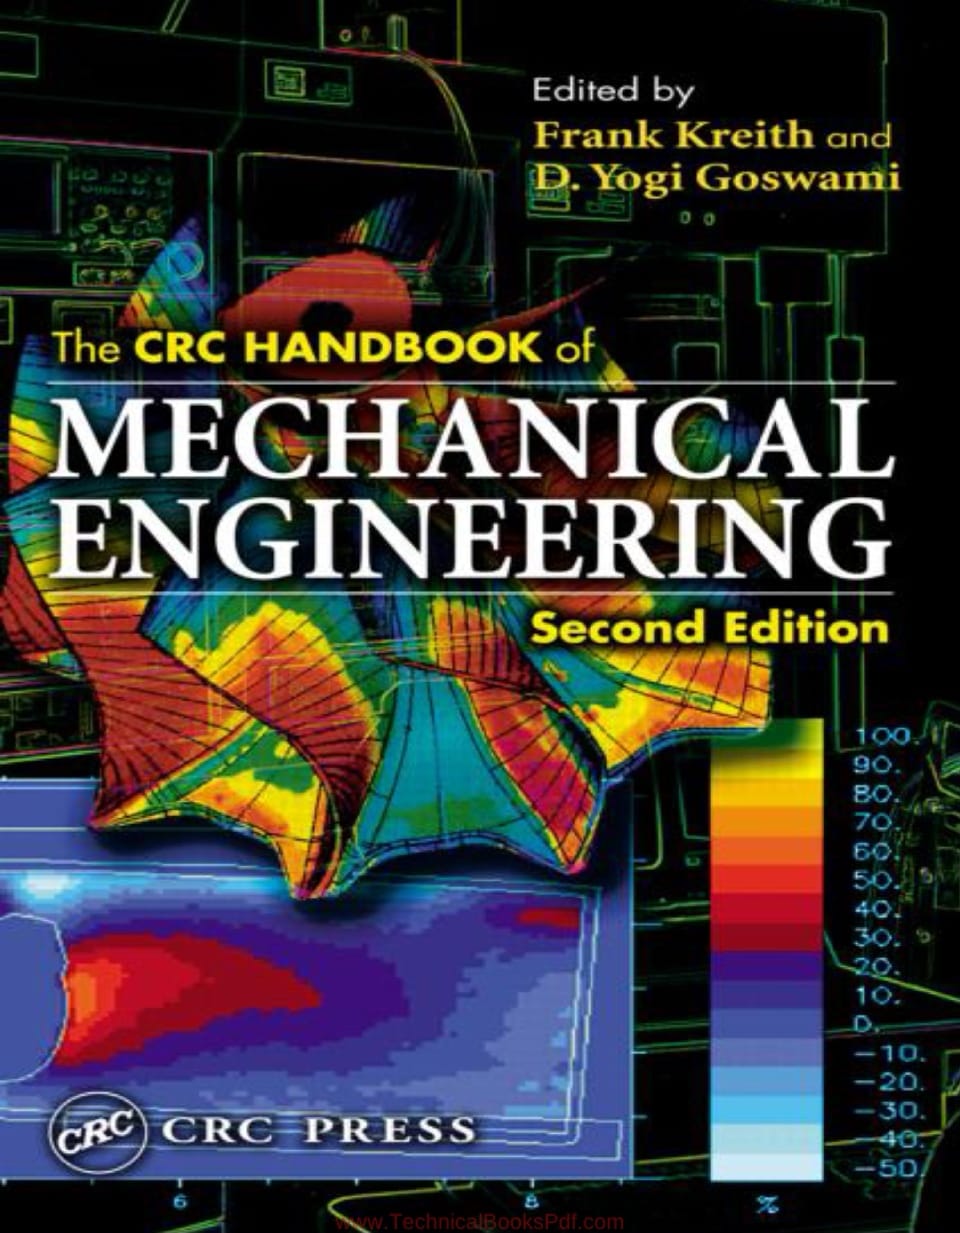 The CRC HANDBOOK of MECHANICAL ENGINEERING